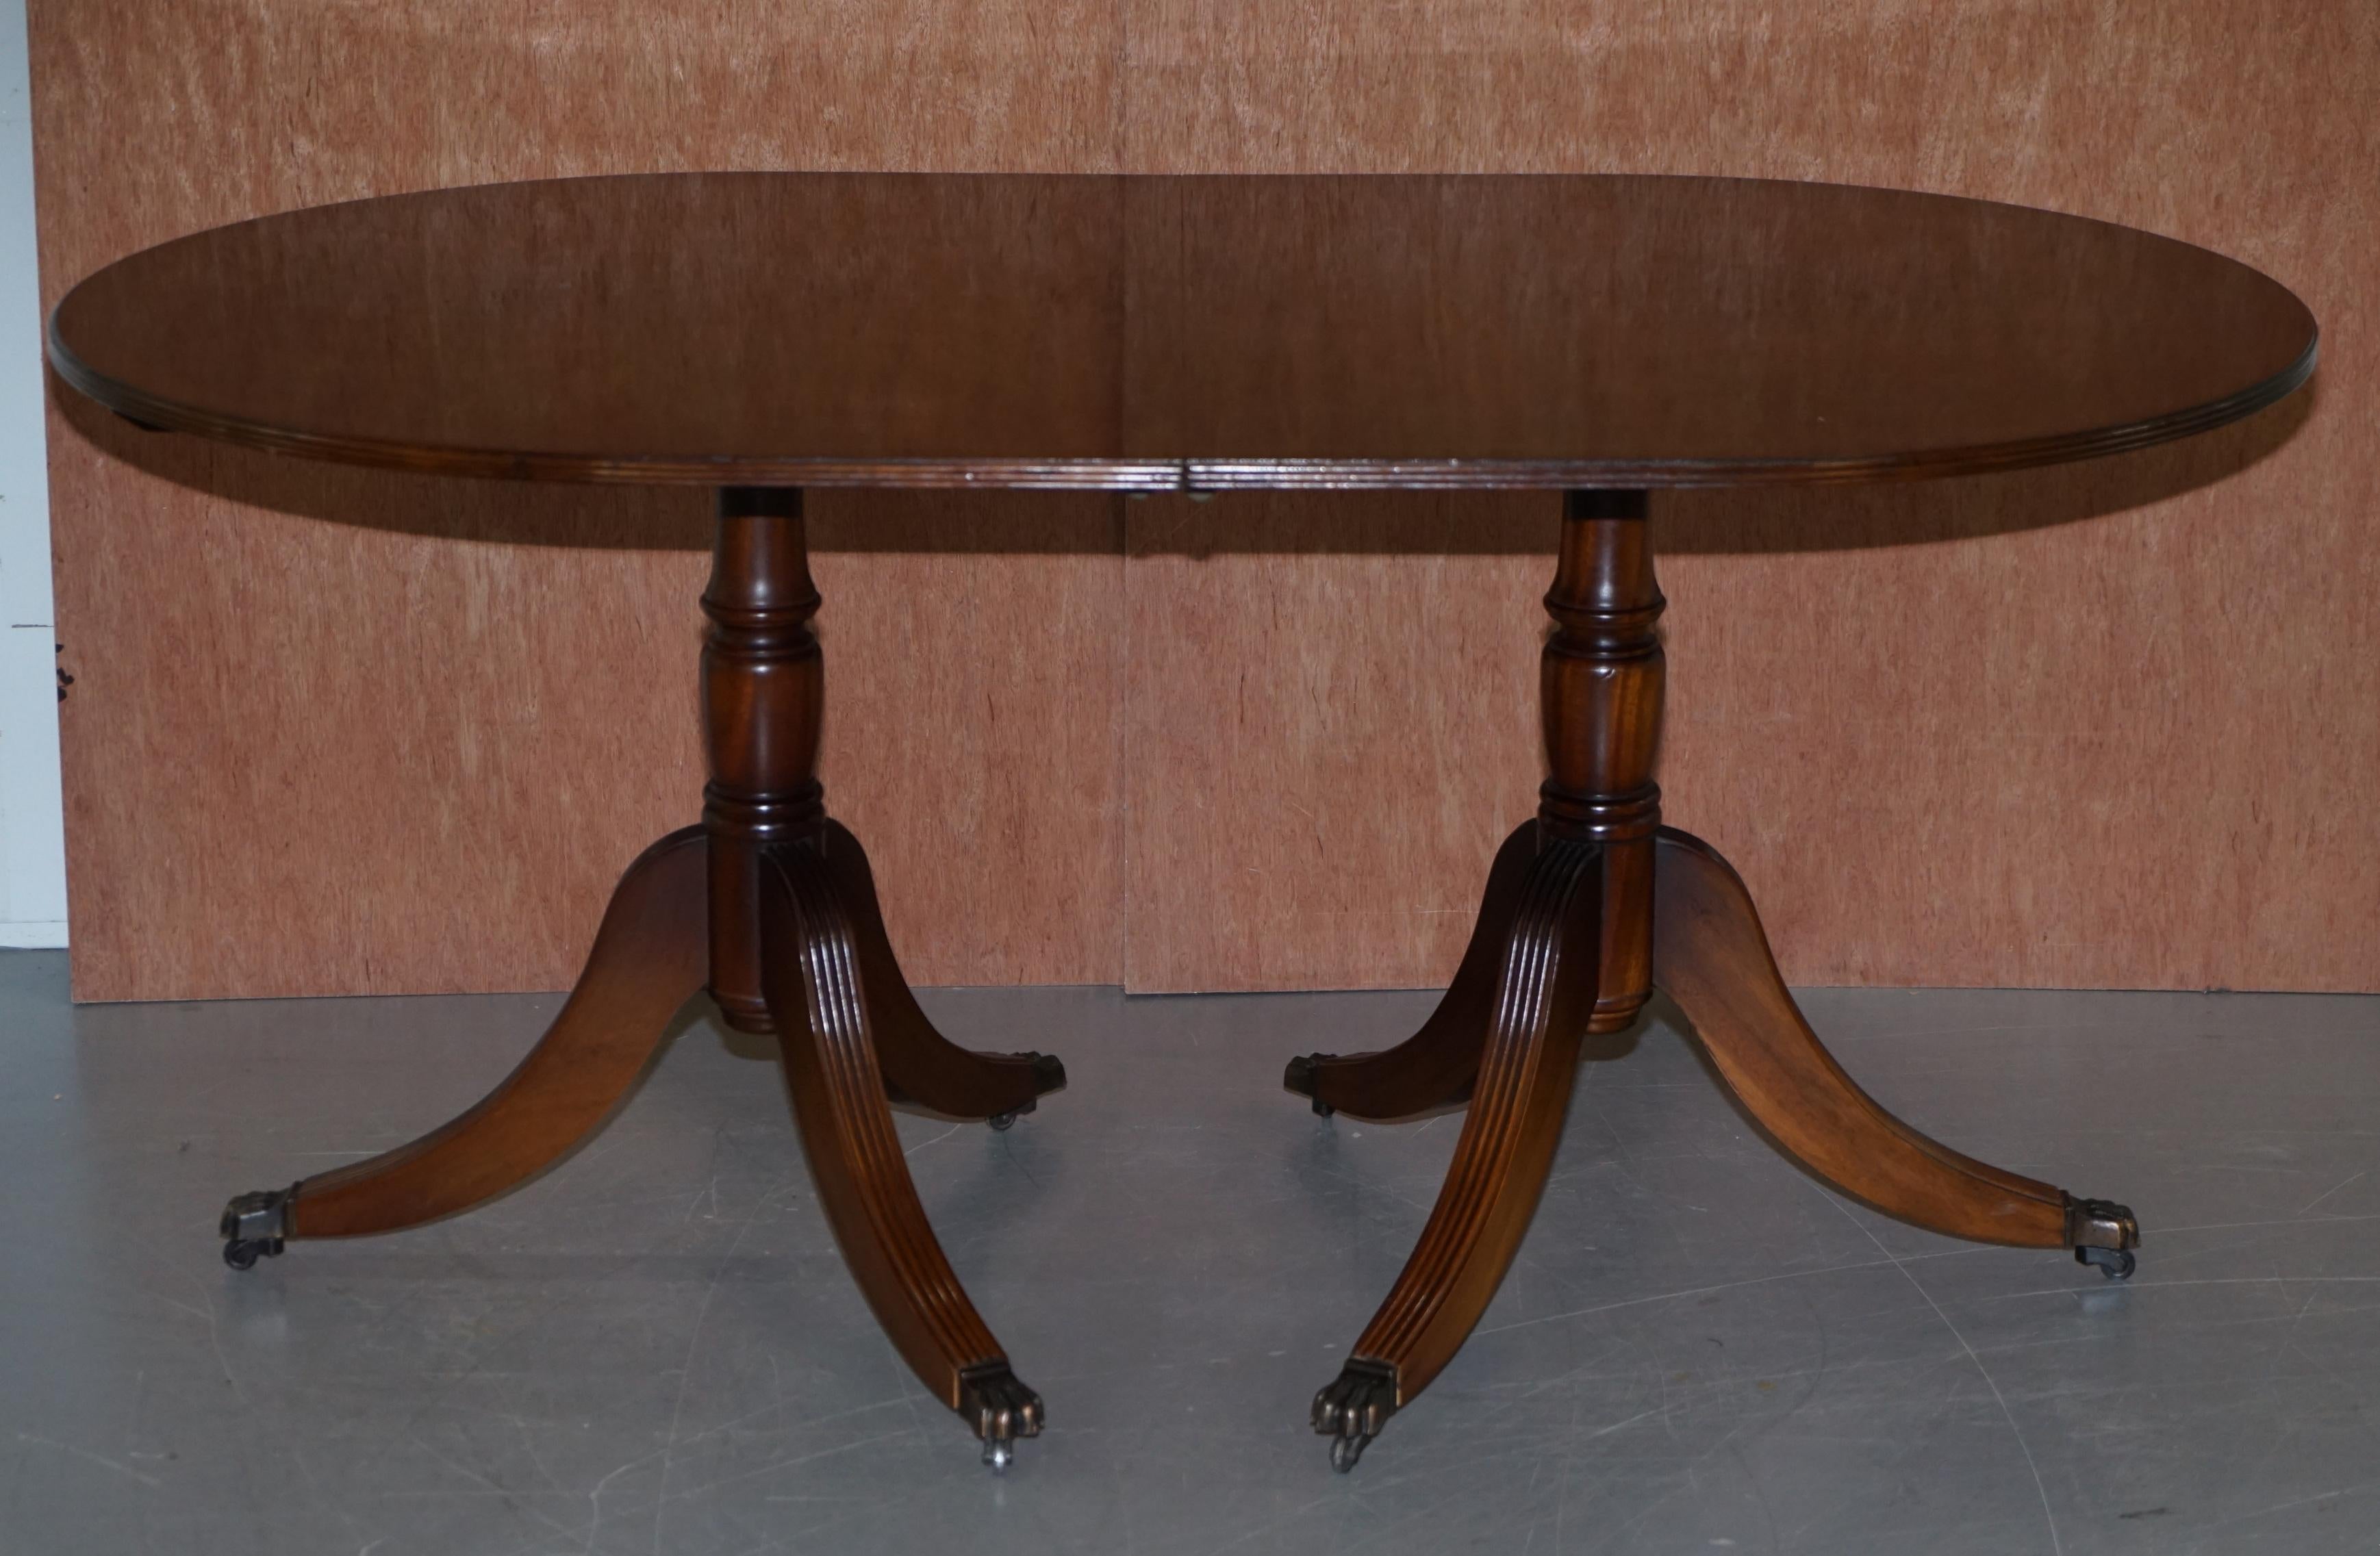 20th Century Extending Tilt Top Oval Dining Table in the Regency Style Solid Hardwood Castors